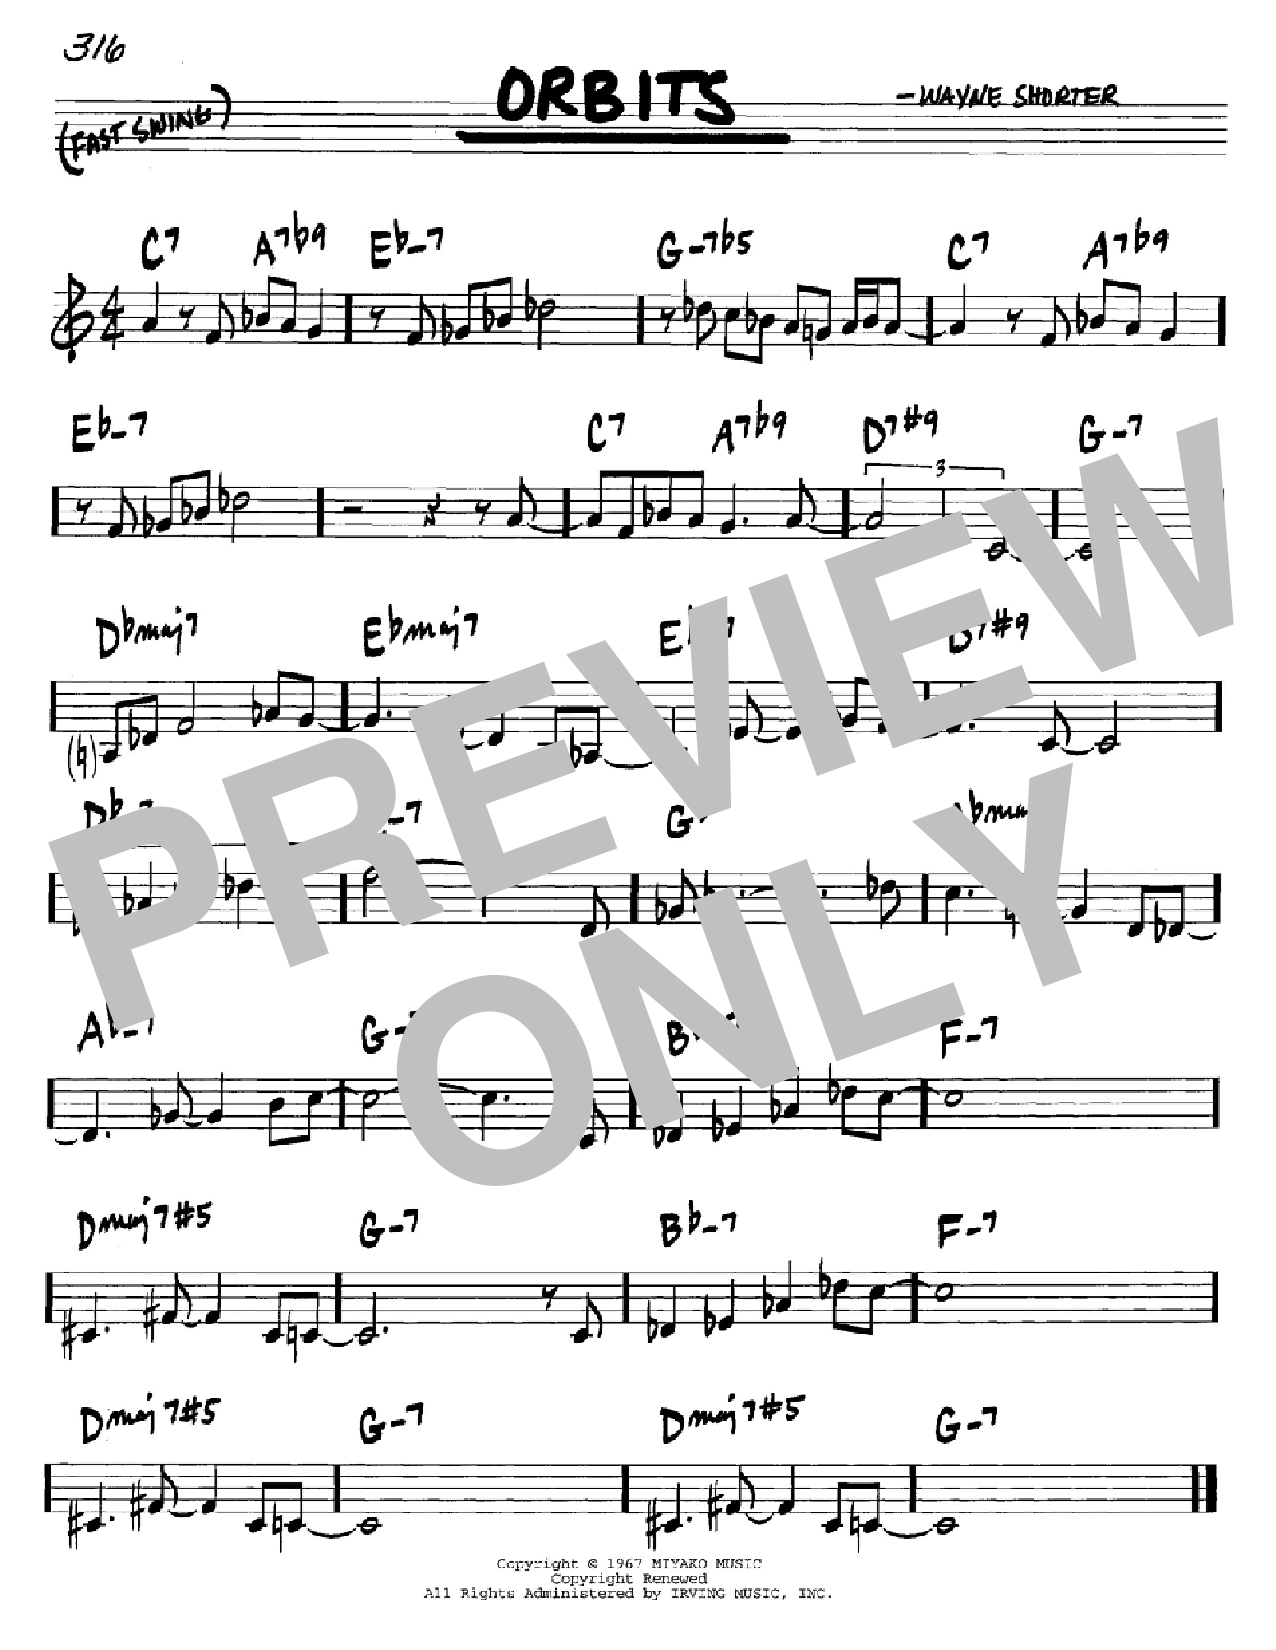 Wayne Shorter Orbits Sheet Music Notes & Chords for Real Book - Melody & Chords - C Instruments - Download or Print PDF